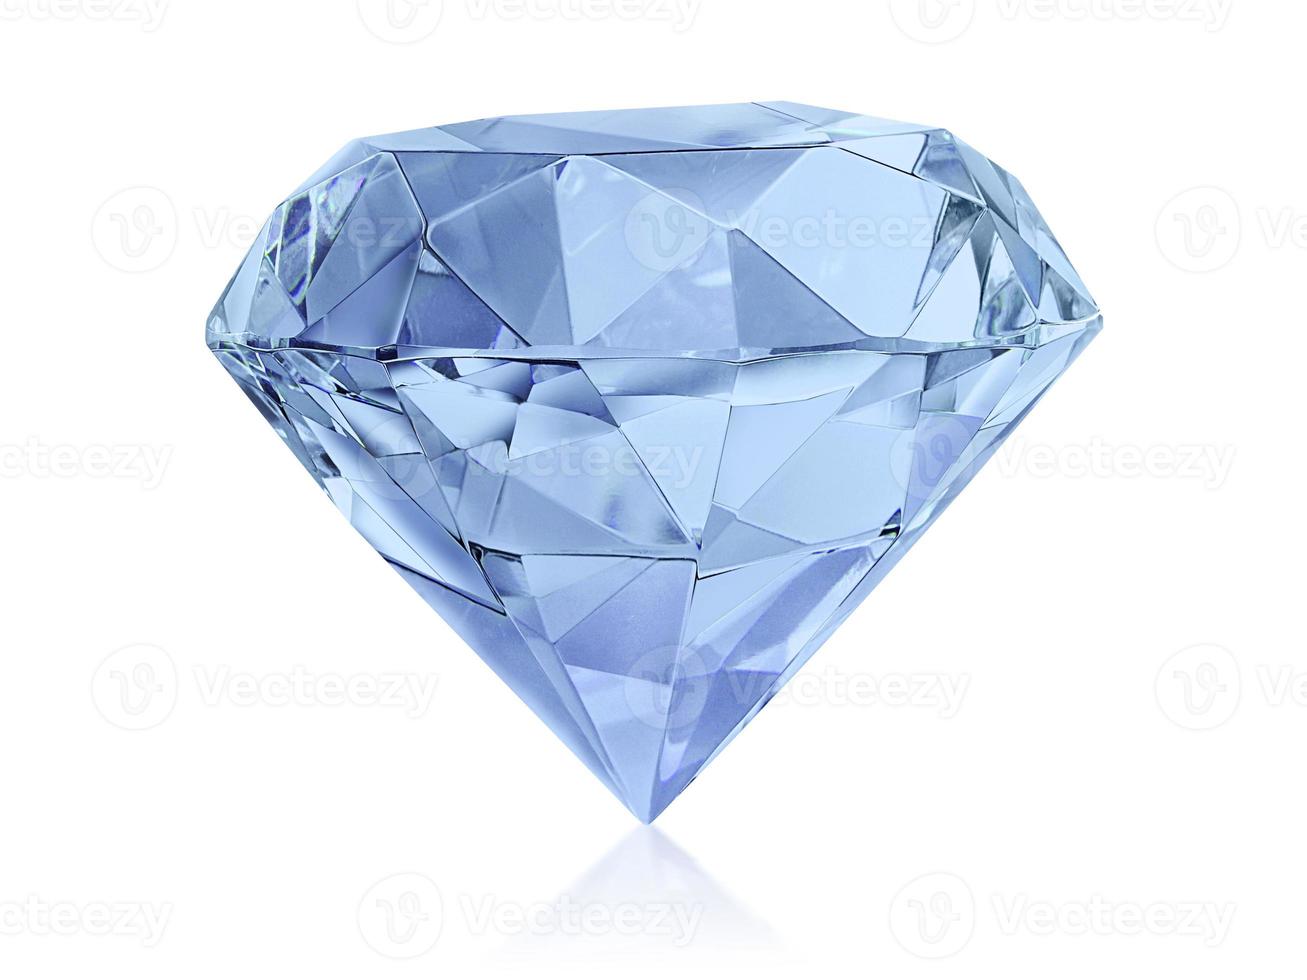 Dazzling diamond blue on white background photo